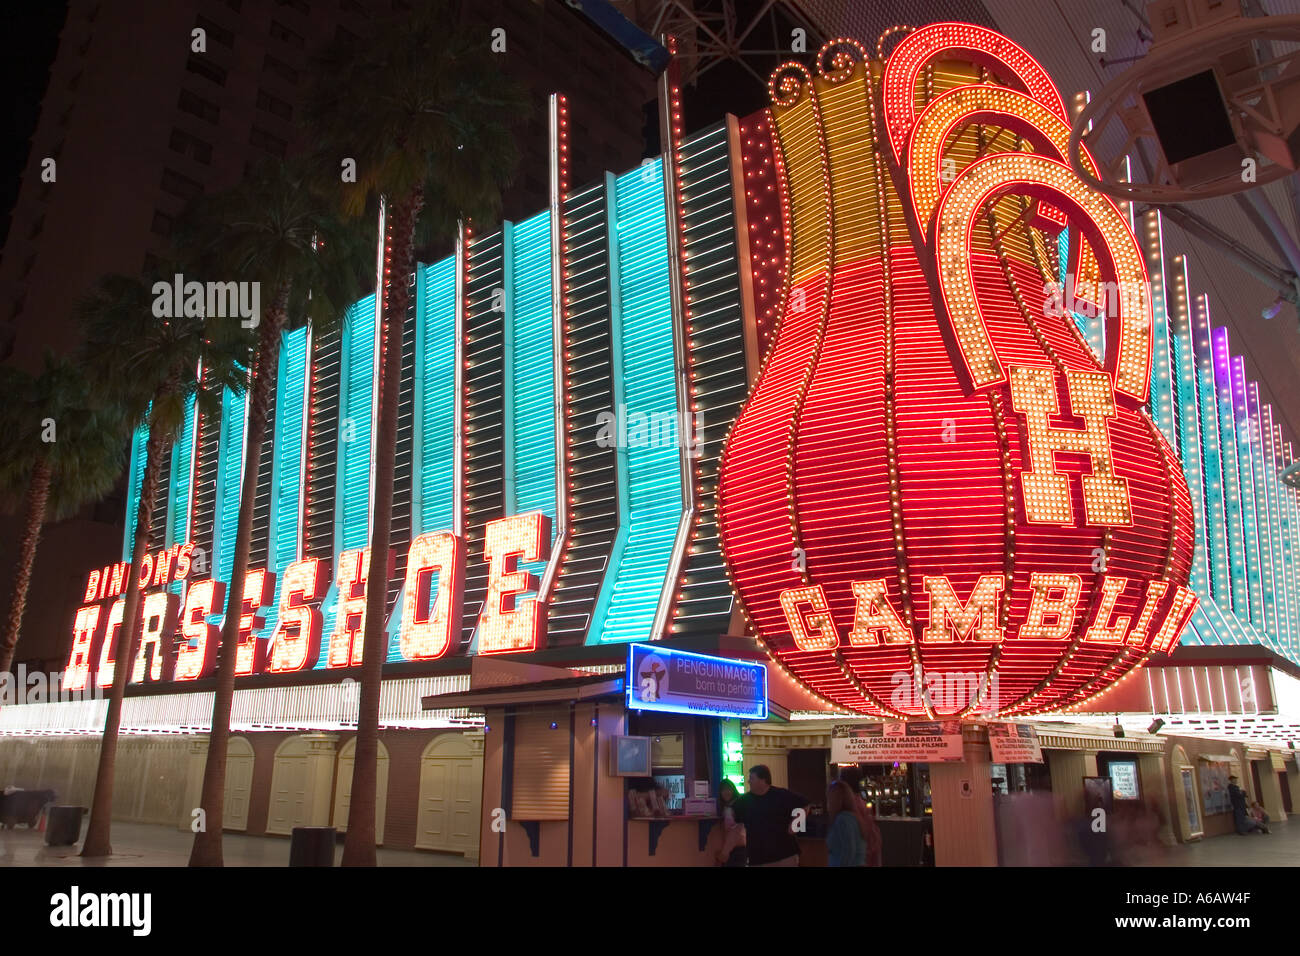 Horseshoe Casino And Hotel At Night, Las Vegas, NV Stock Photo